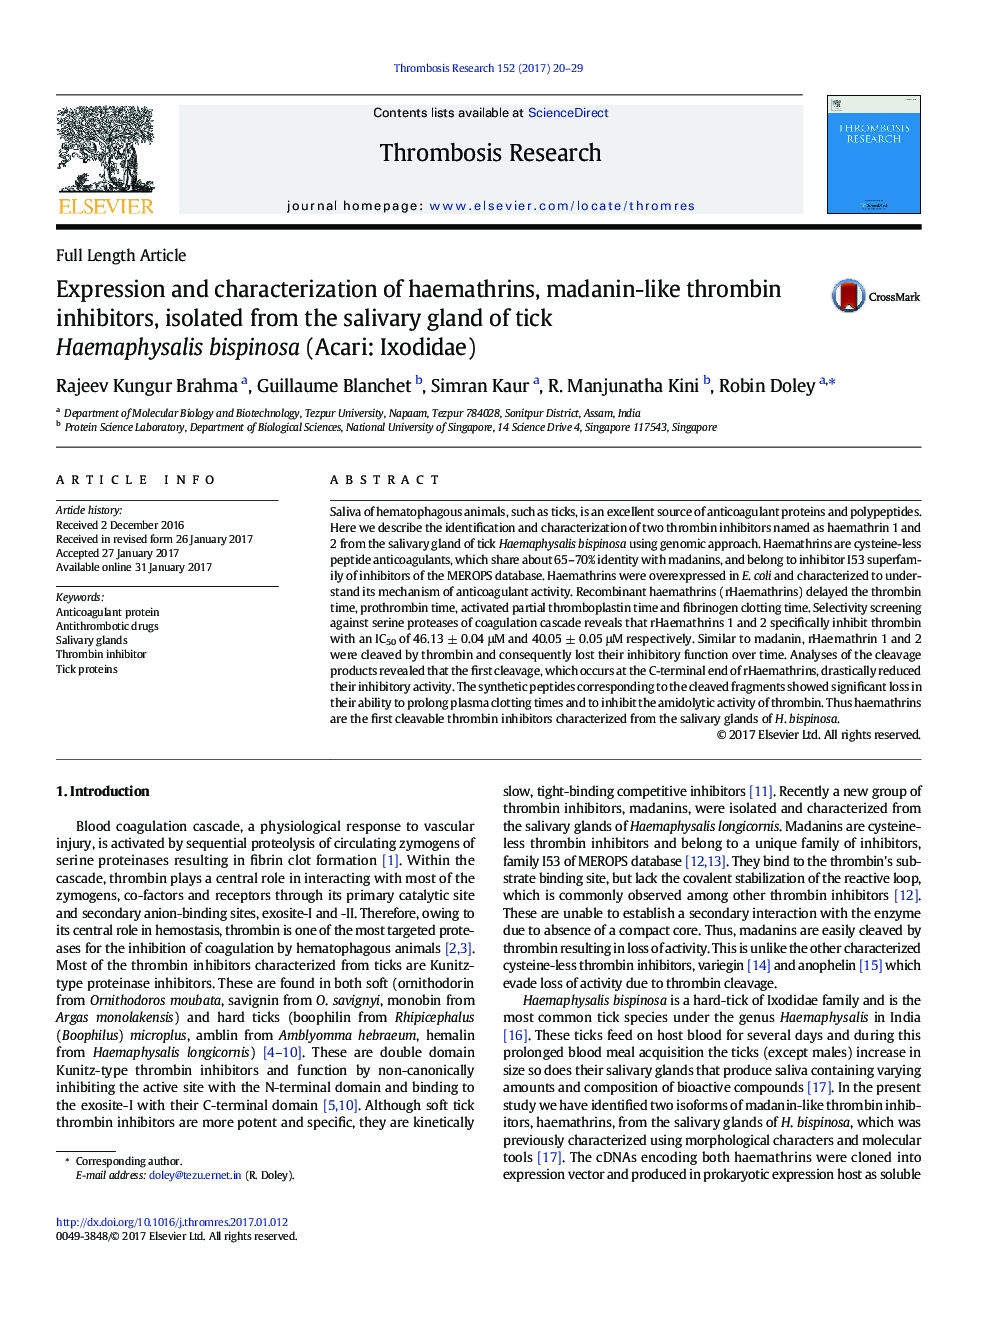 Expression and characterization of haemathrins, madanin-like thrombin inhibitors, isolated from the salivary gland of tick Haemaphysalis bispinosa (Acari: Ixodidae)